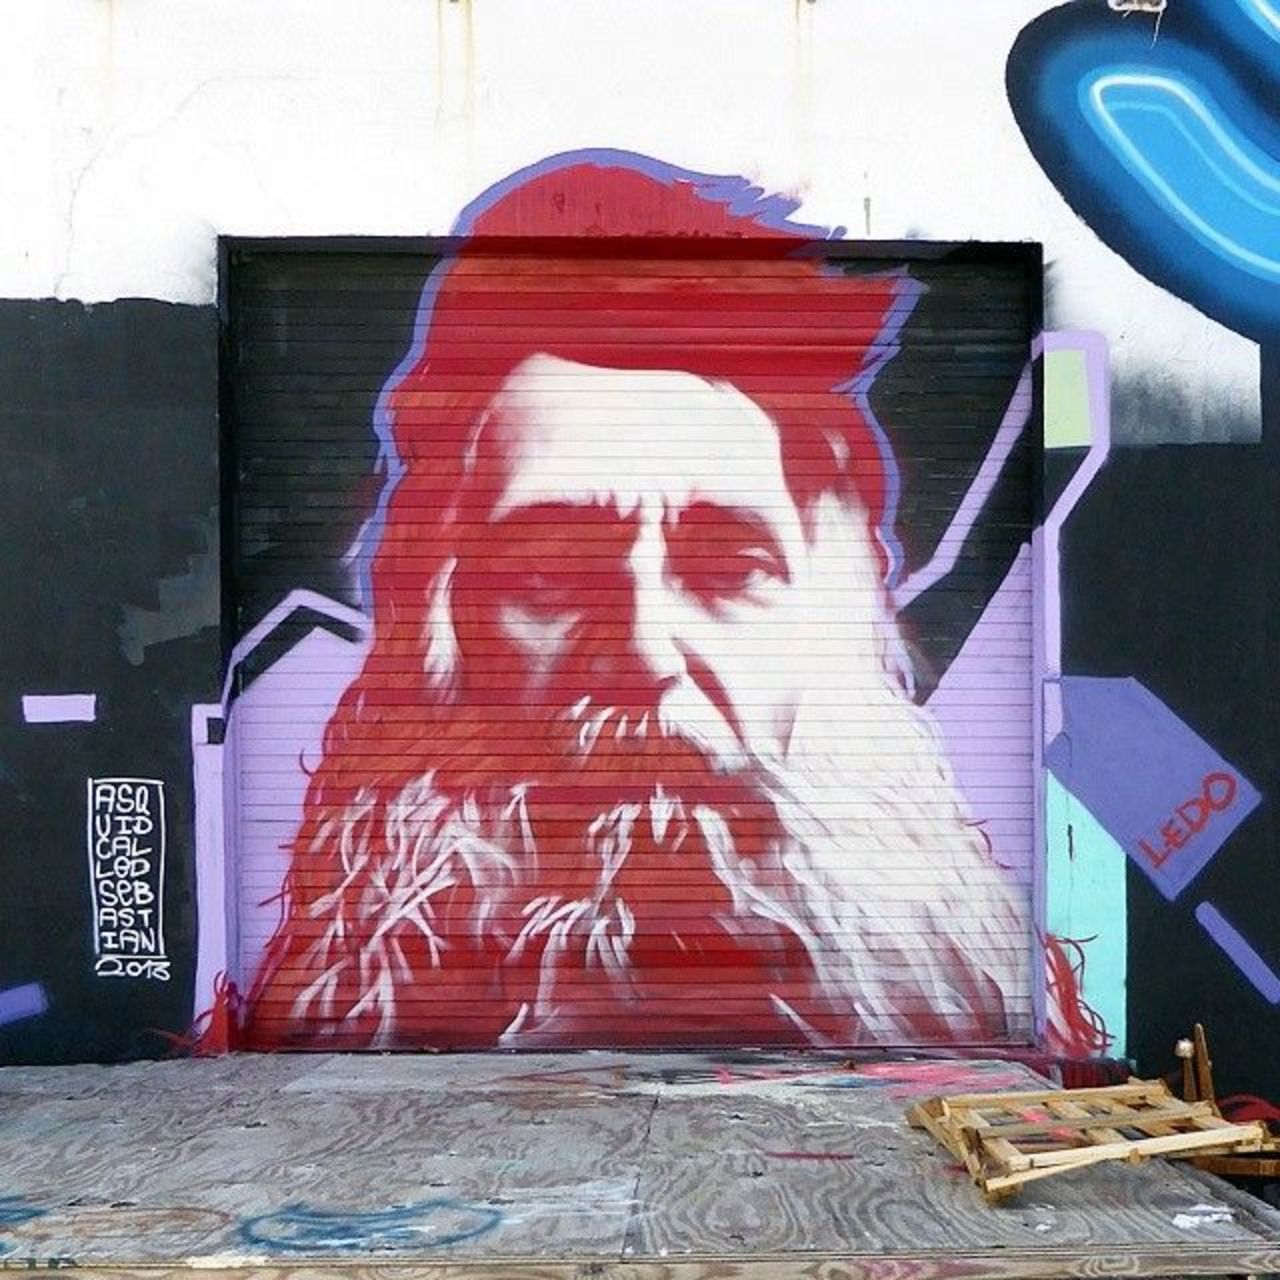 Kevin Ledo 
Wynwood Miami

#Graffiti #StreetArt #Mural #painting #Urban #Art #Wynwood #Miami http://t.co/8xepImggAo